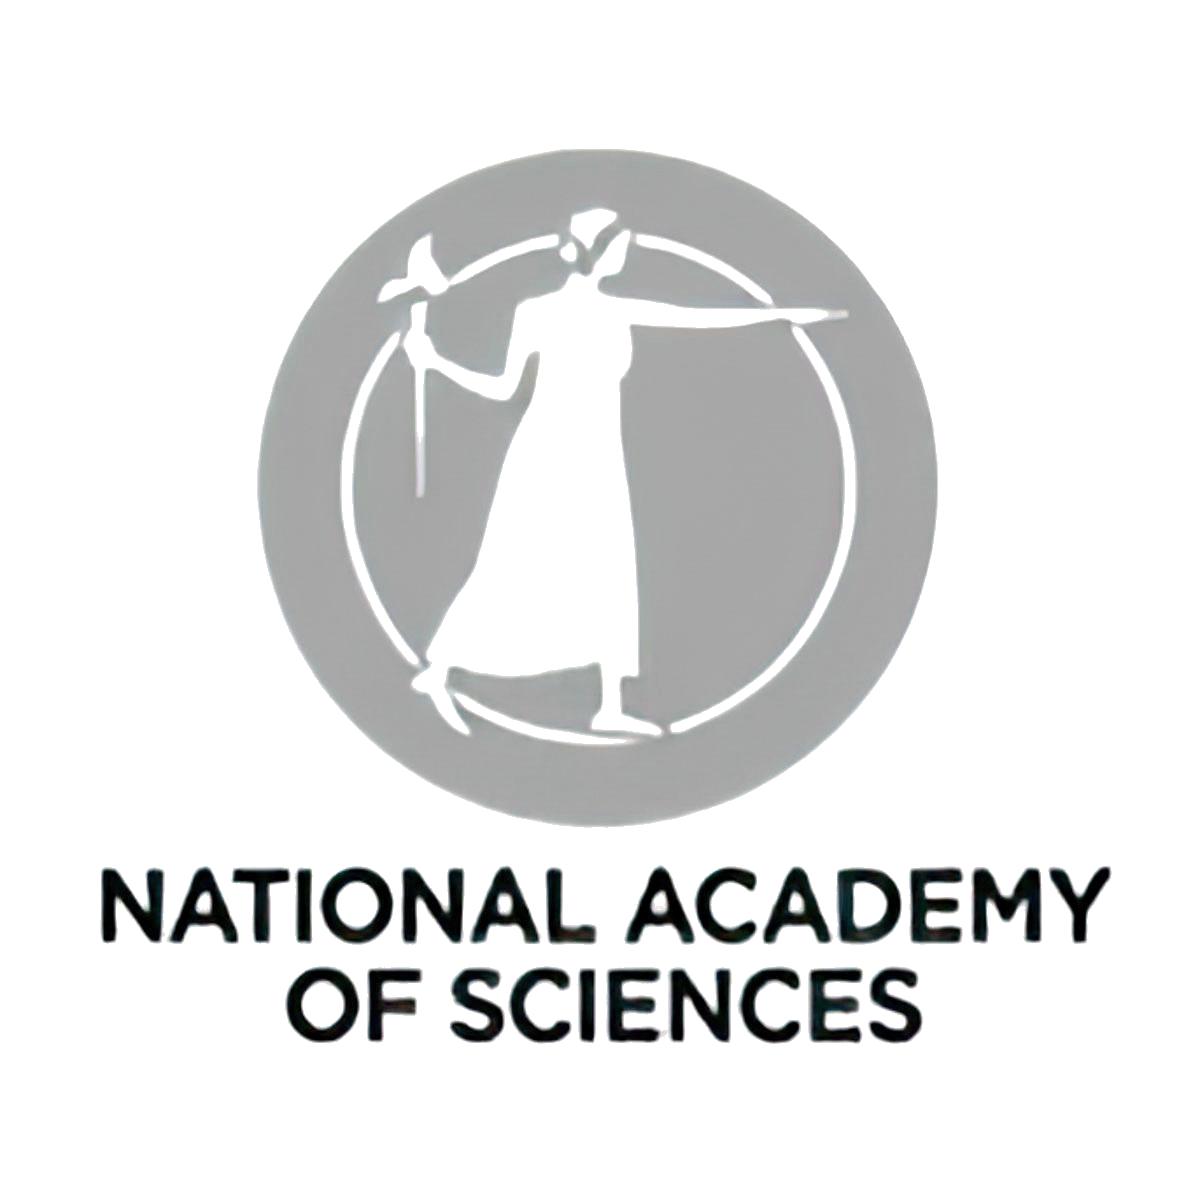 NationalAcademyofSciences logo.png